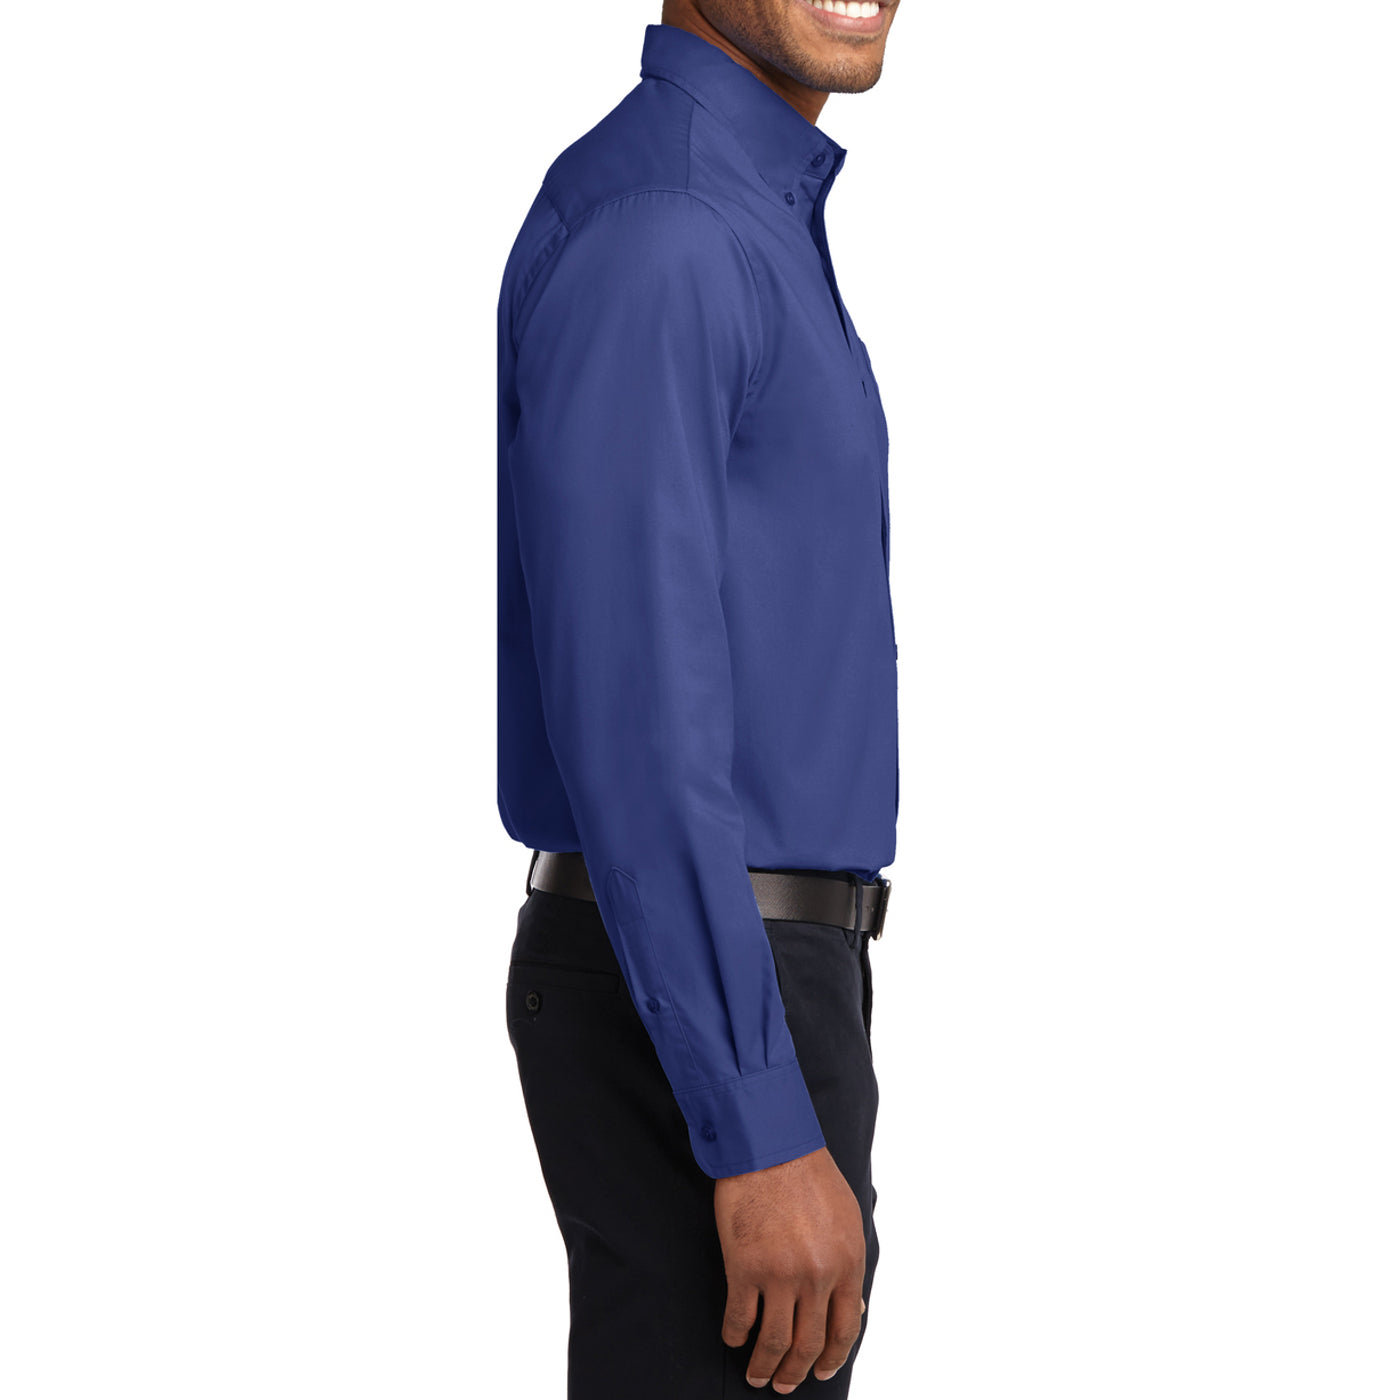 Men's Long Sleeve Easy Care Shirt - Mediterranean Blue - Side